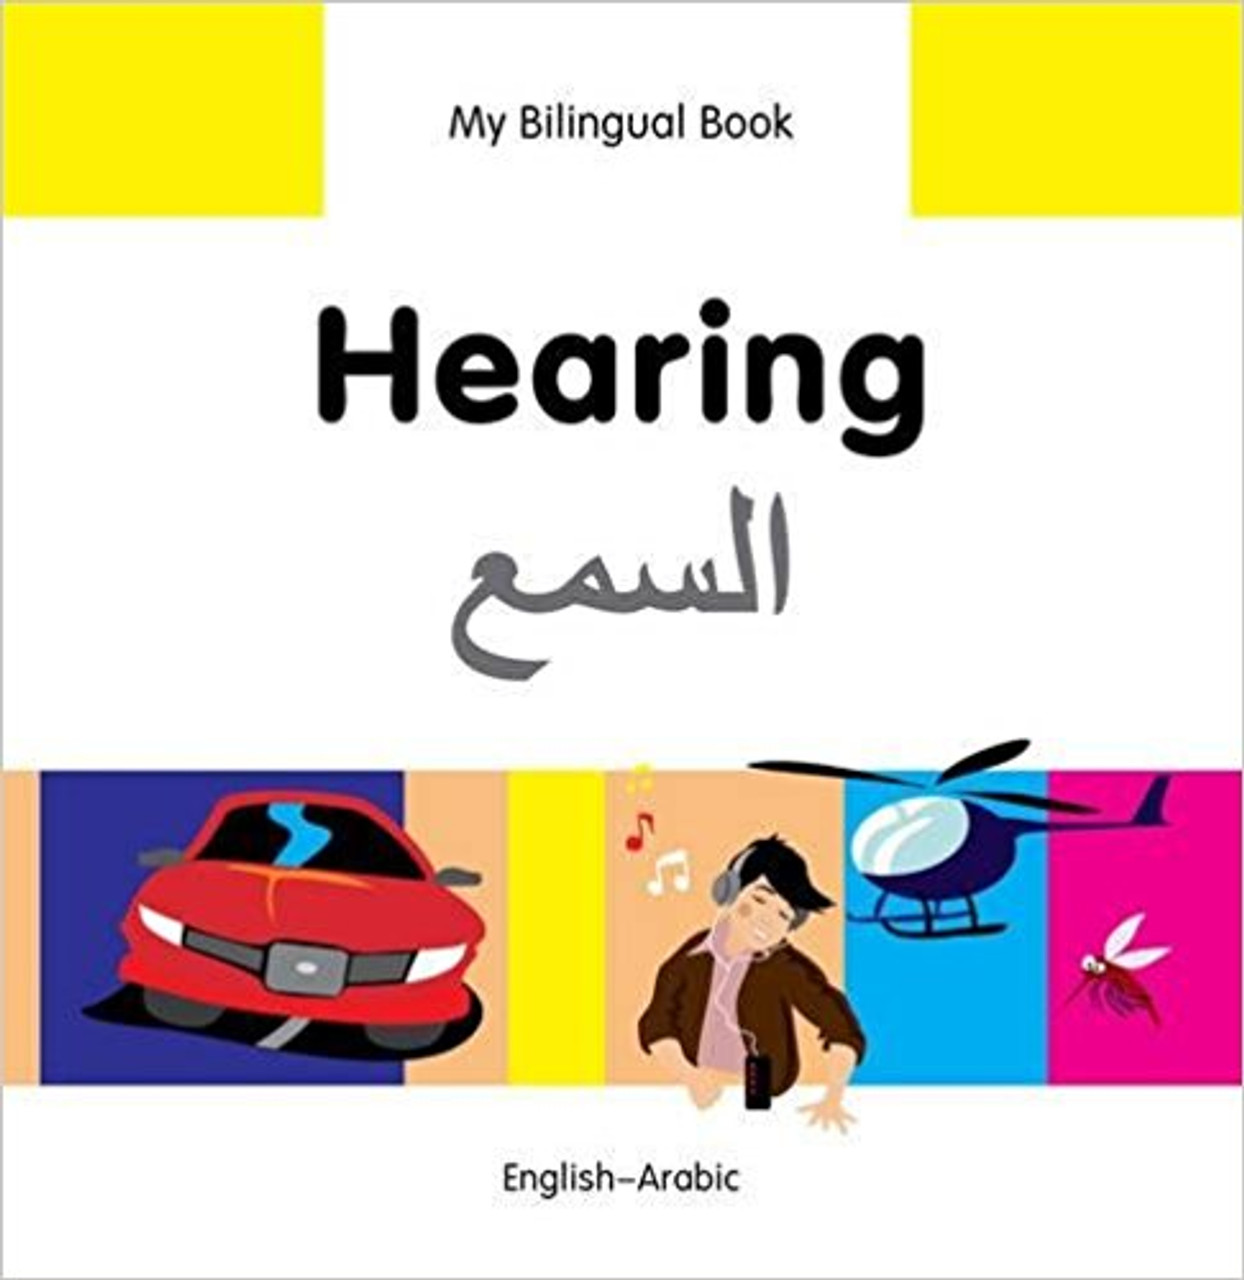 Hearing (Arabic) by Milet Publishing